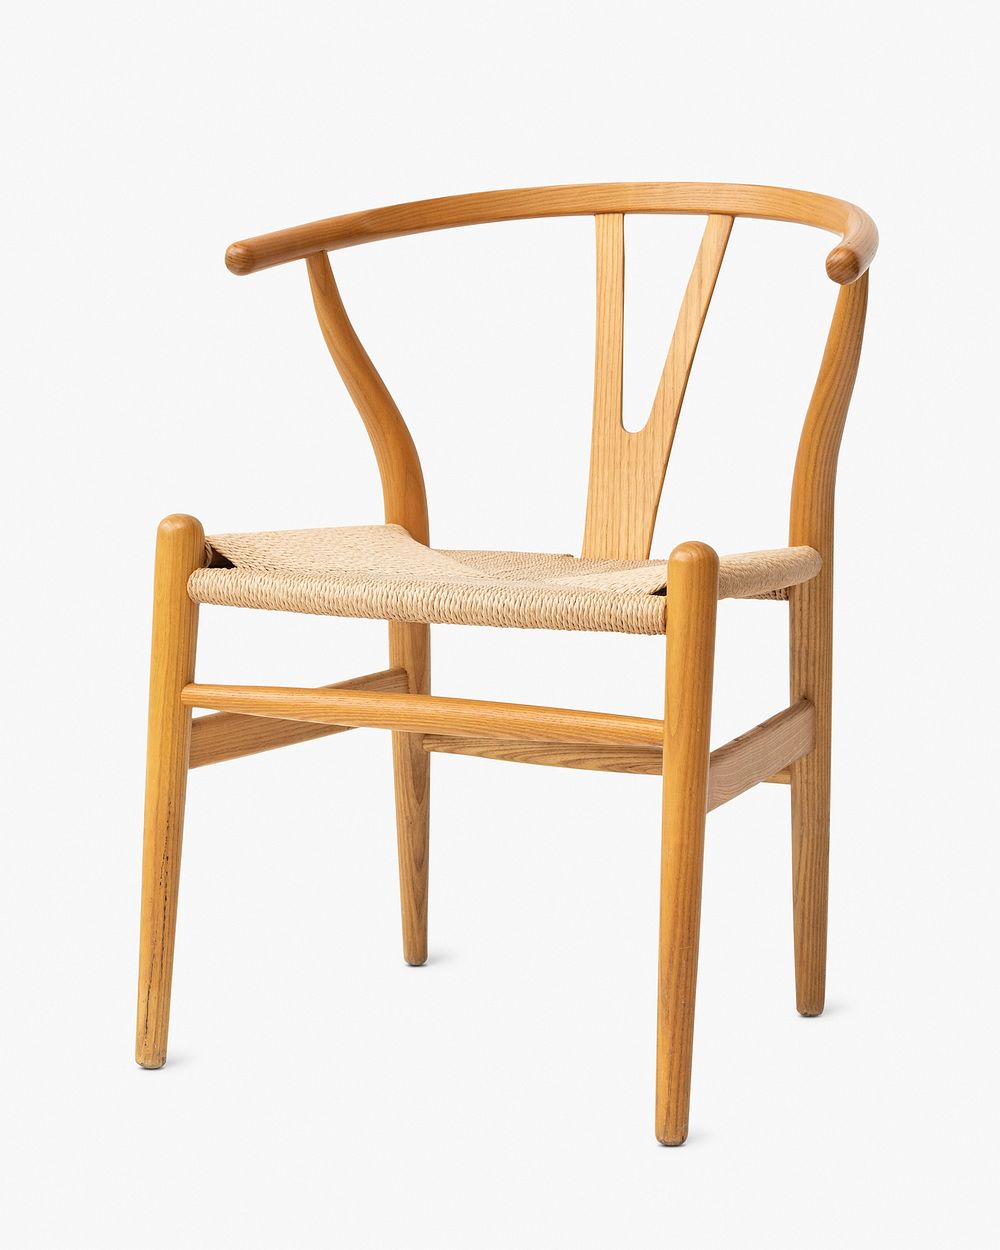 Wishbone chair psd mockup in natural wood